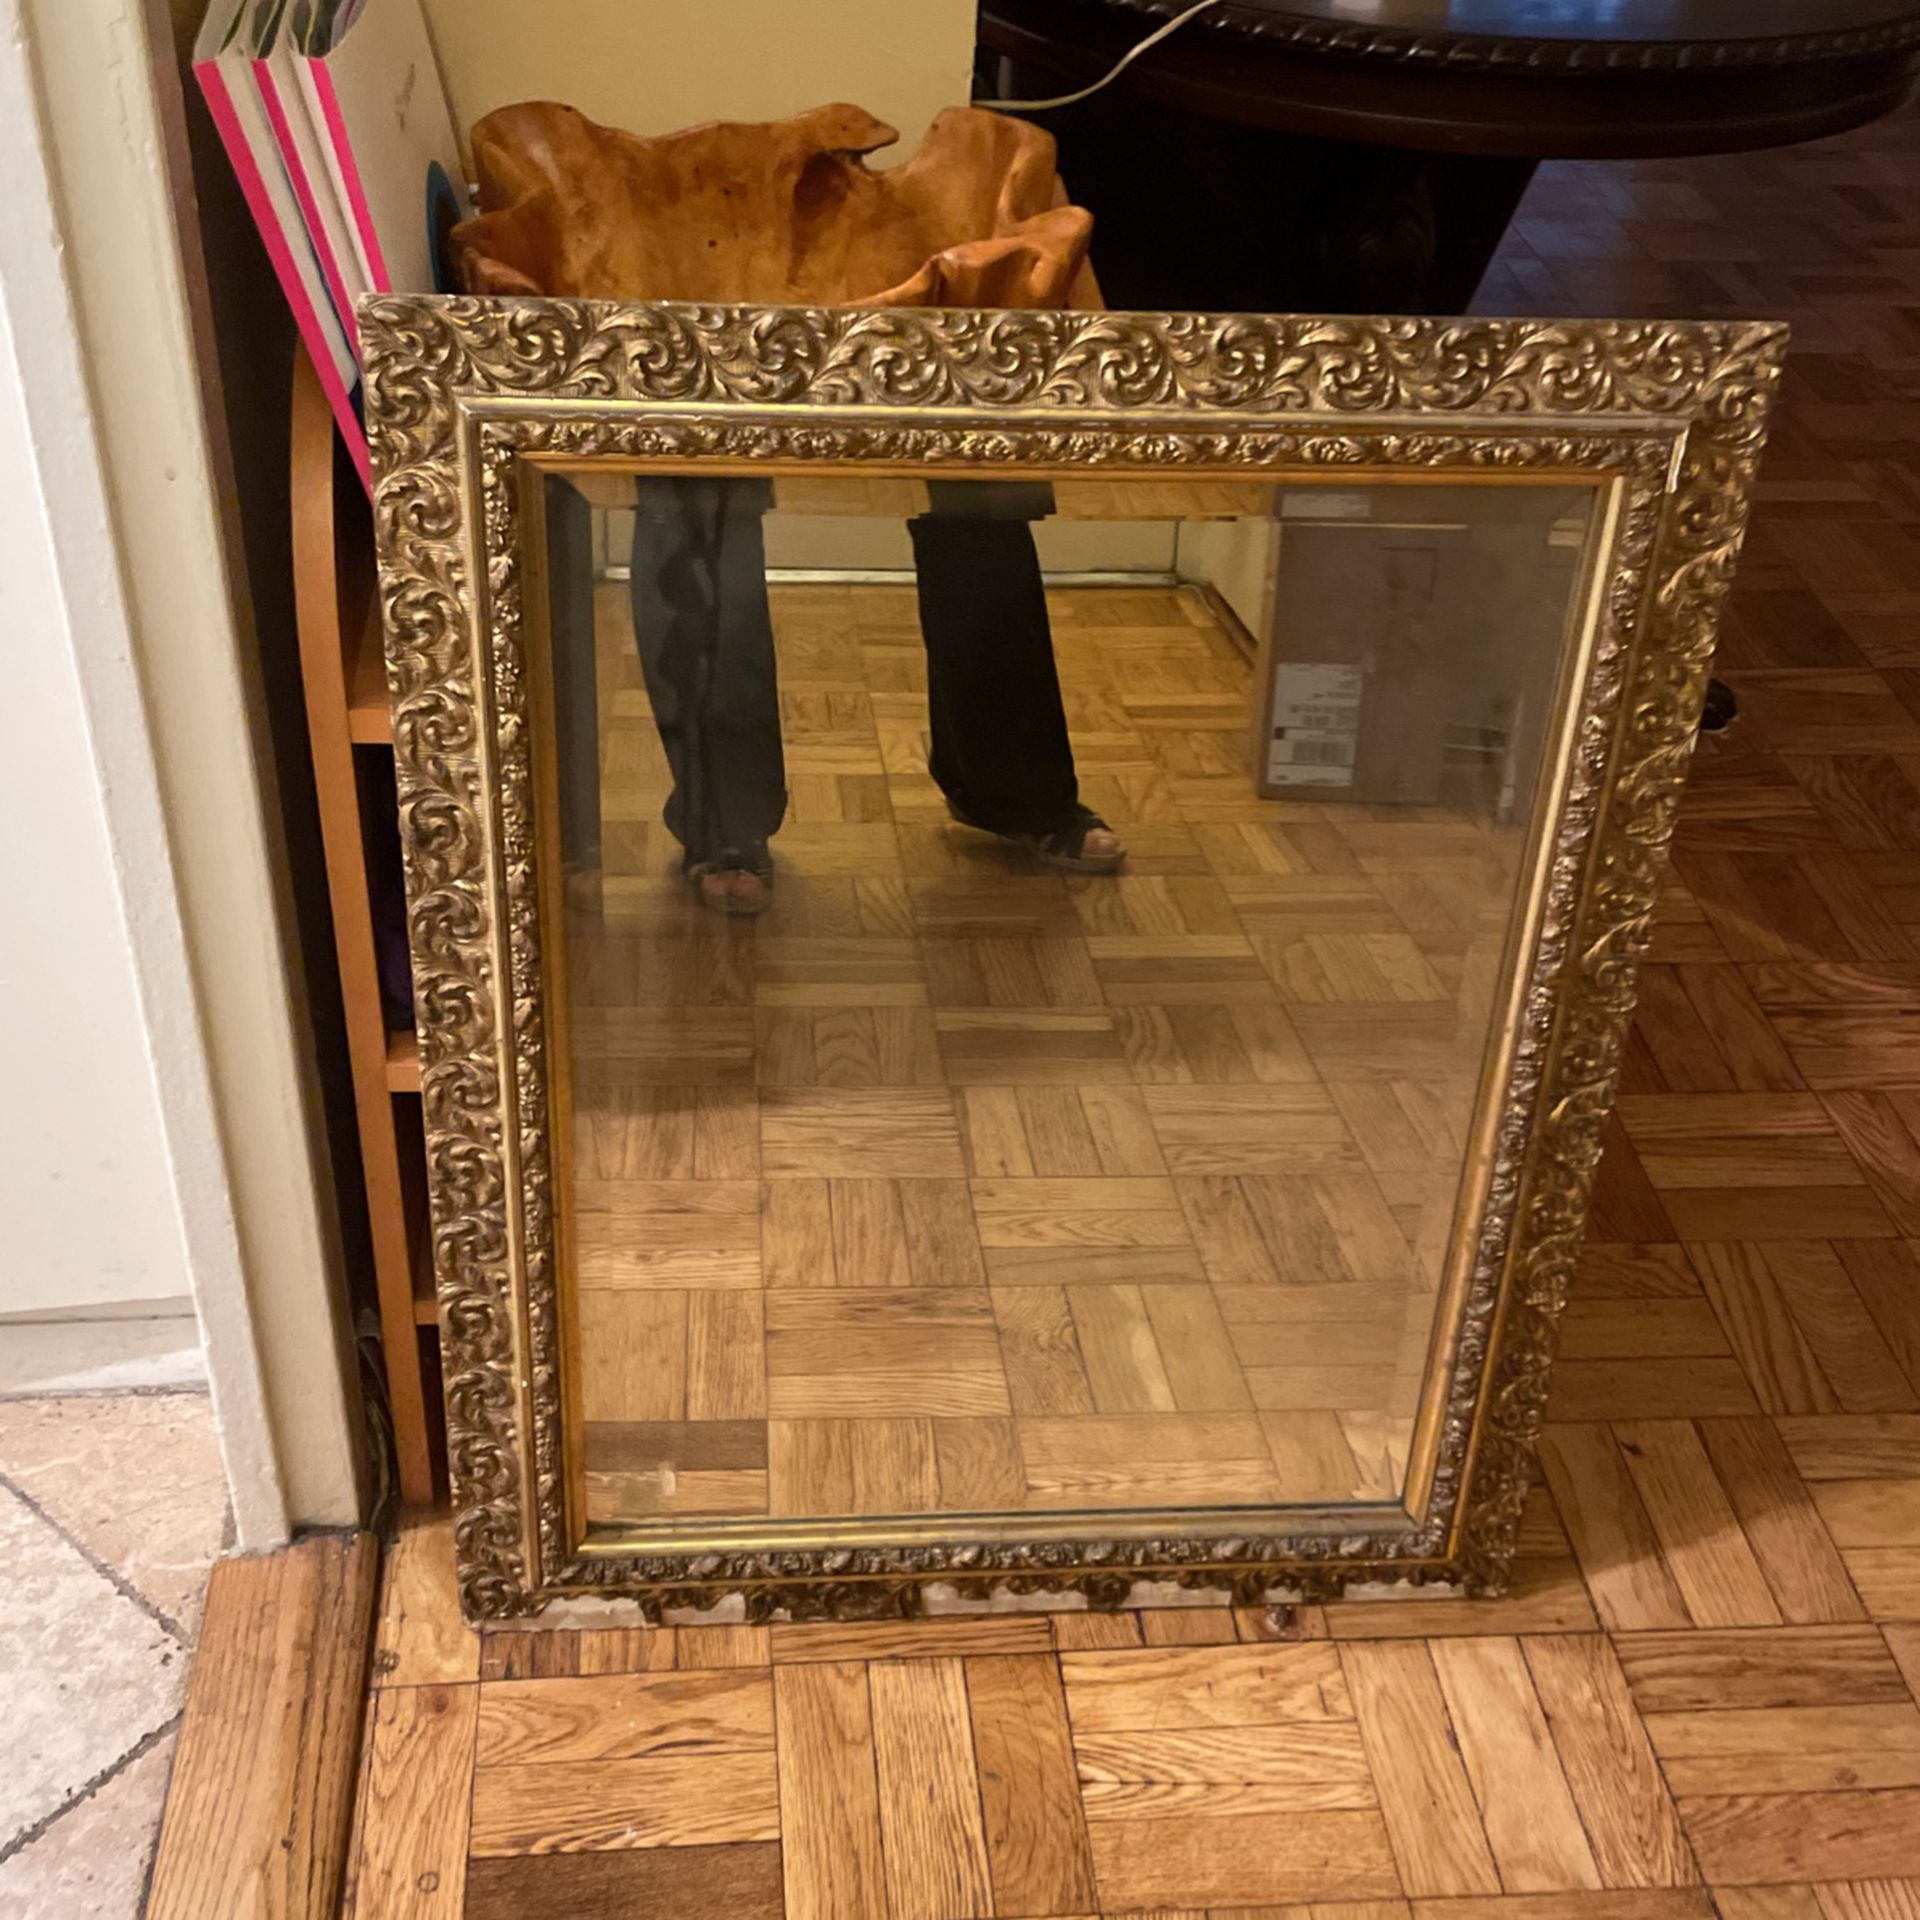 Vintage Beveled Large Mirror